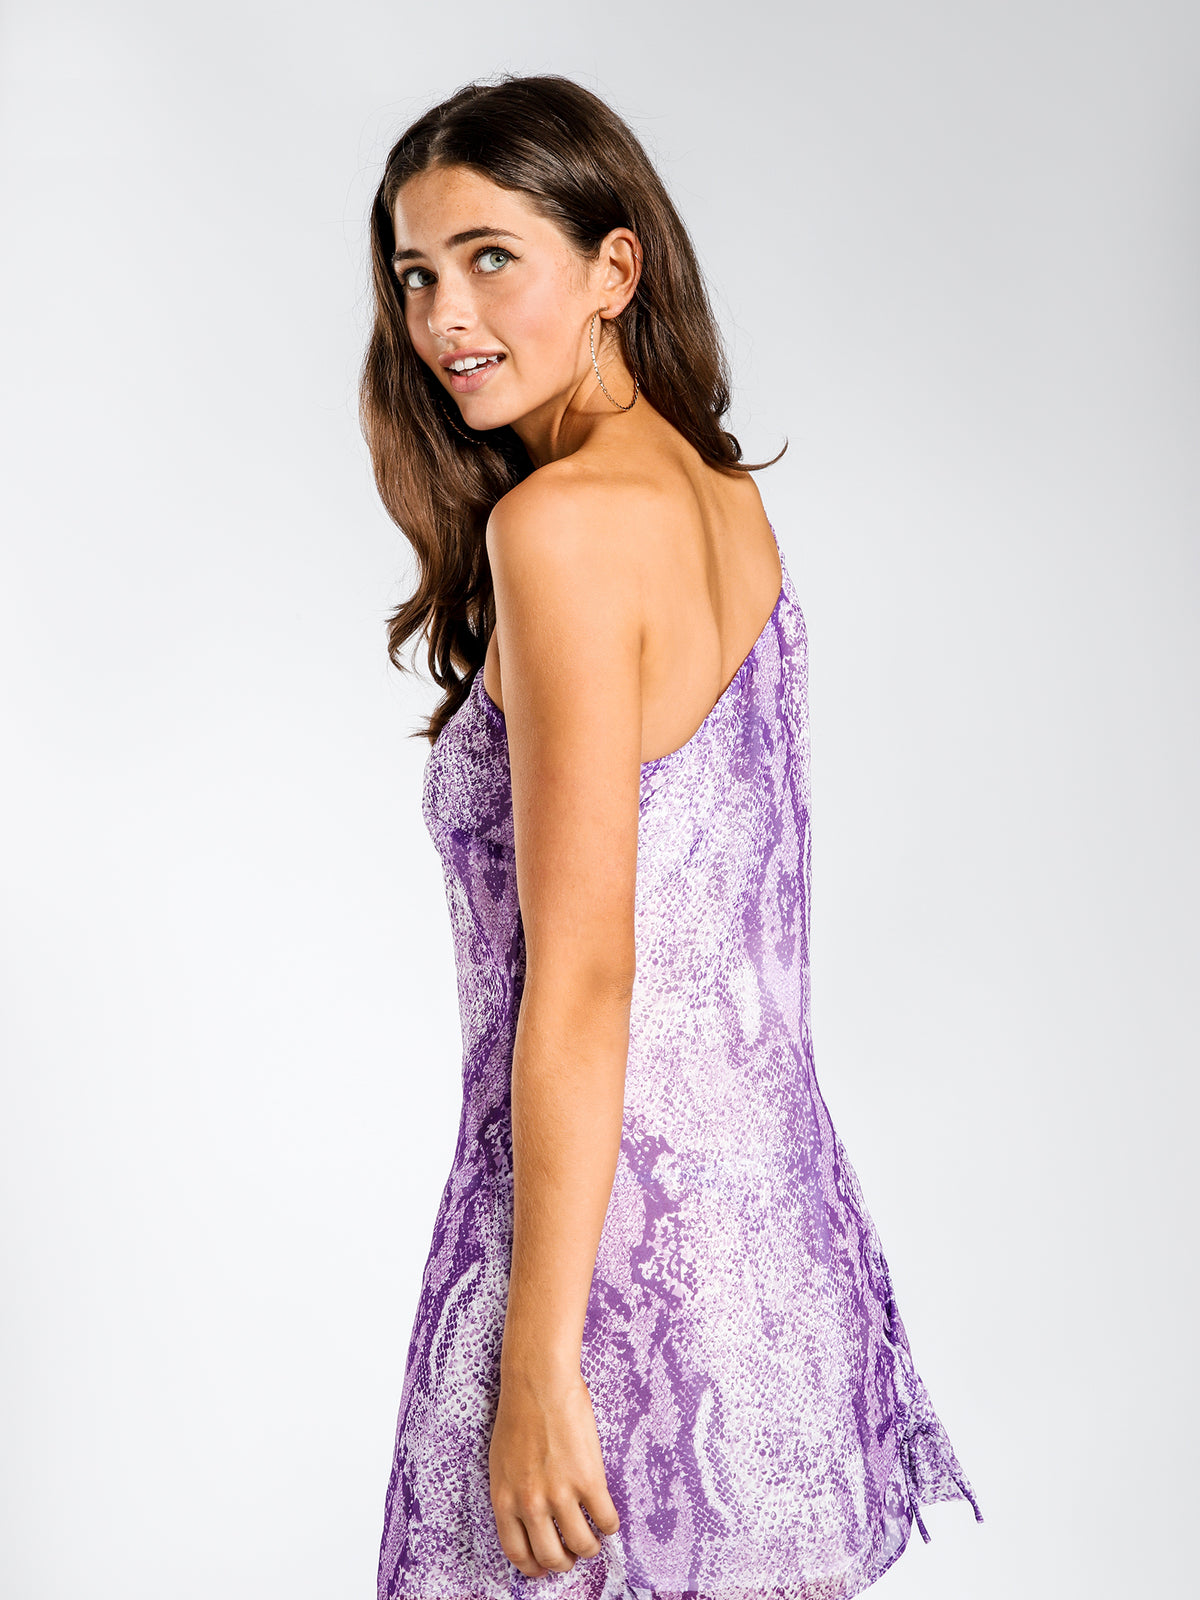 Edi One-Shoulder Mini Dress in Purple Poison Snake Print